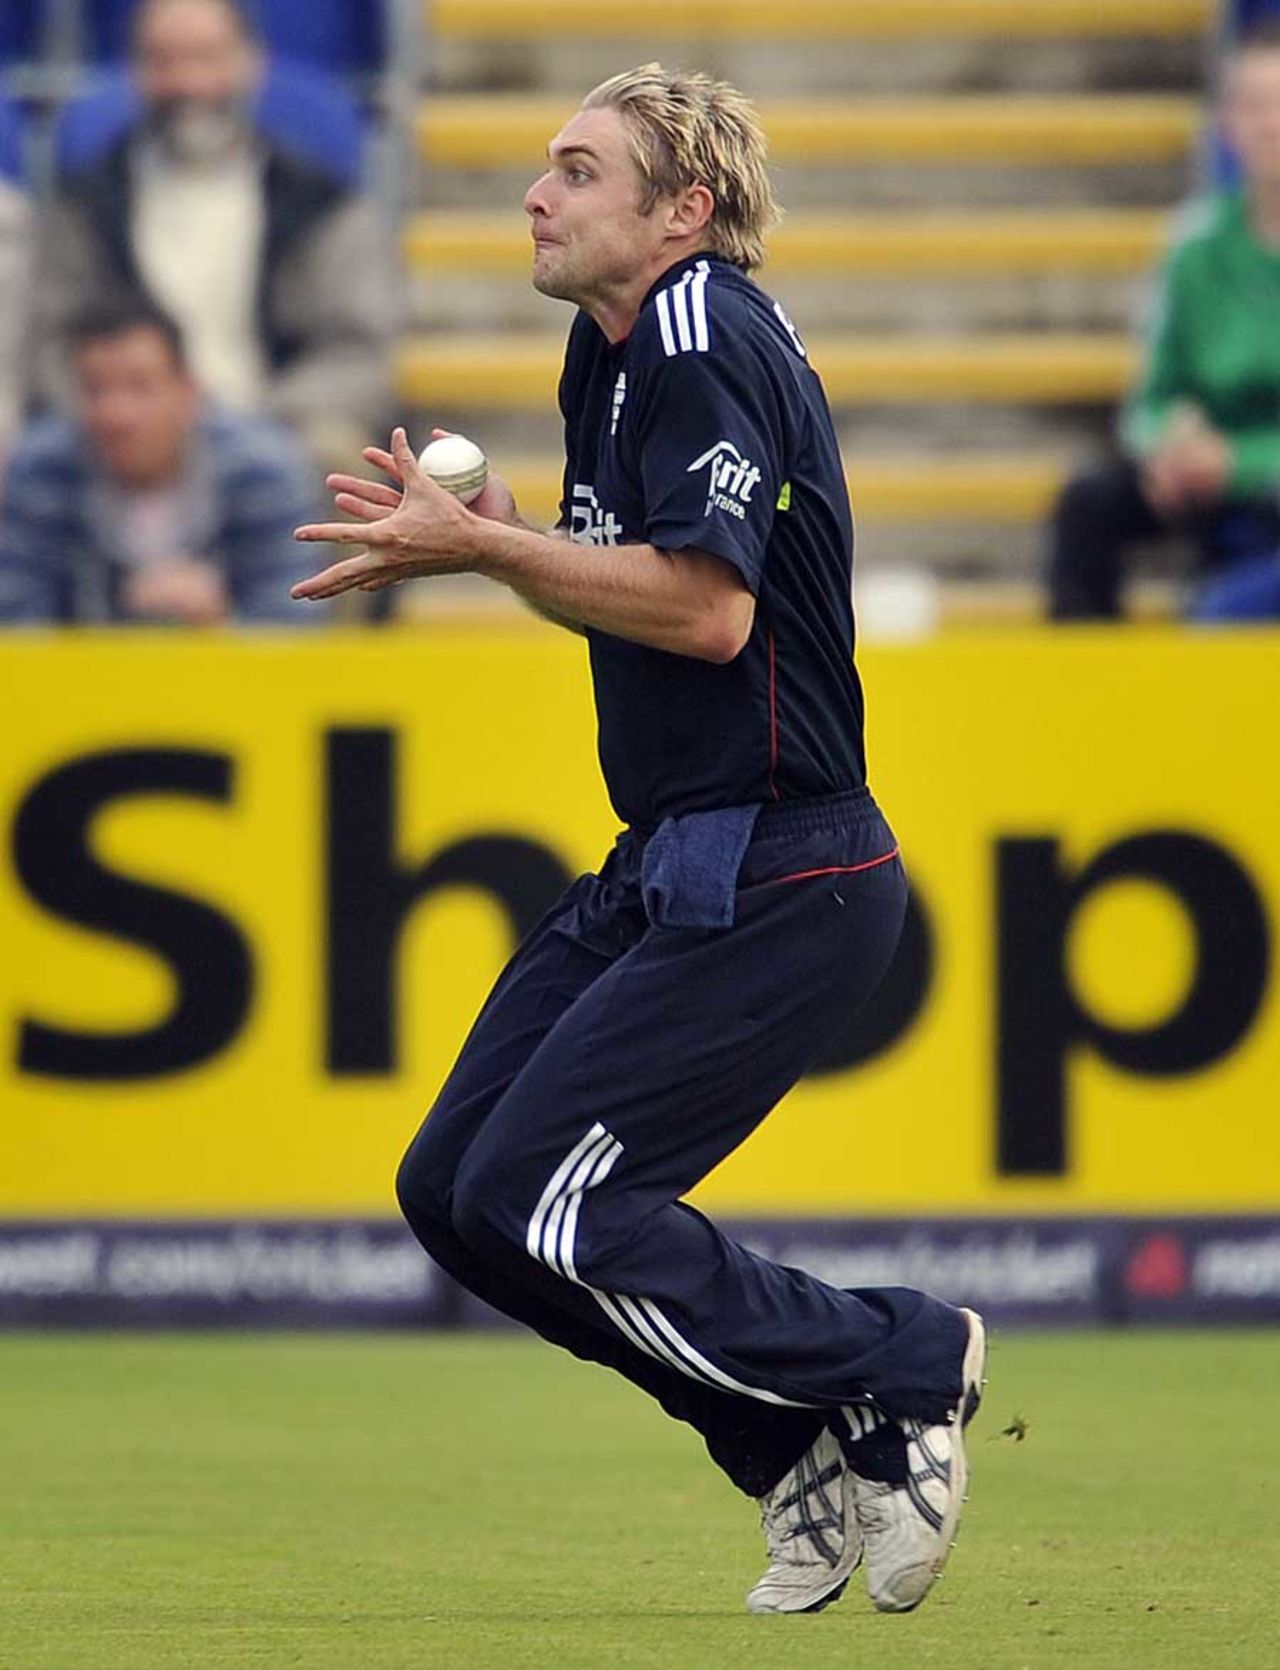 Luke Wright dropped Shahid Afridi towards the end of Pakistan's innings, England v Pakistan, 1st T20I, Cardiff, September 5, 2010